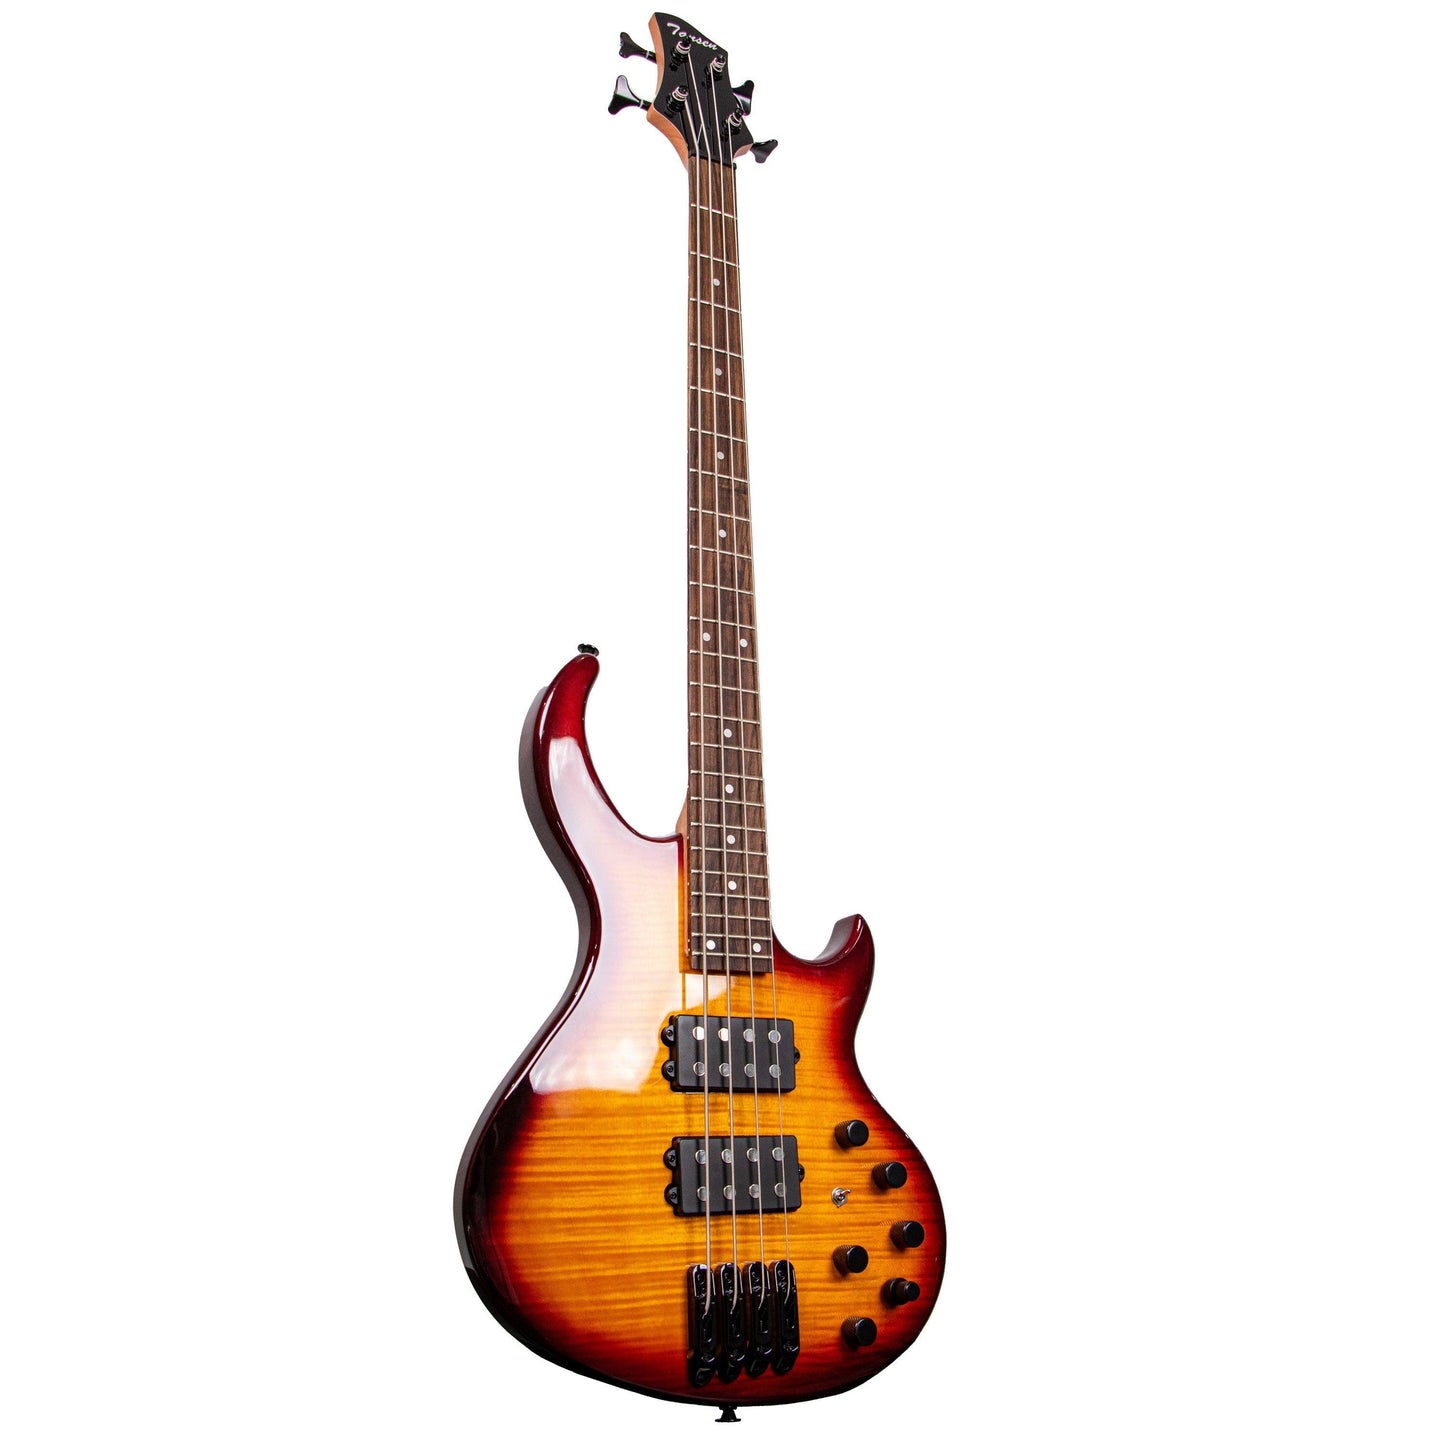 Tansen B444 Guitar Bass Electric 4-String Laurel Fingerboard HH Pickups